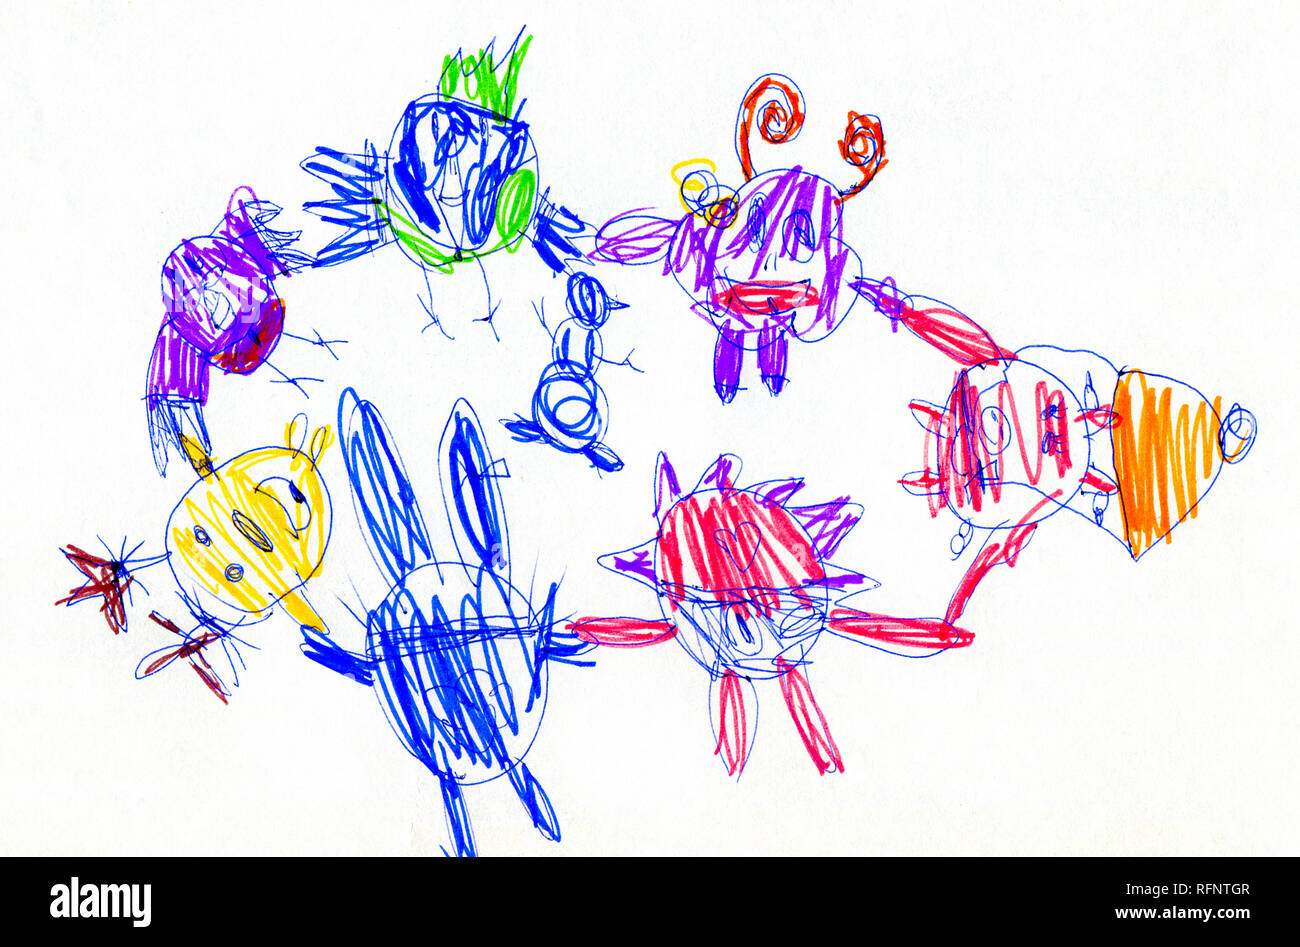 L'Art dessin d'enfant. Banque D'Images